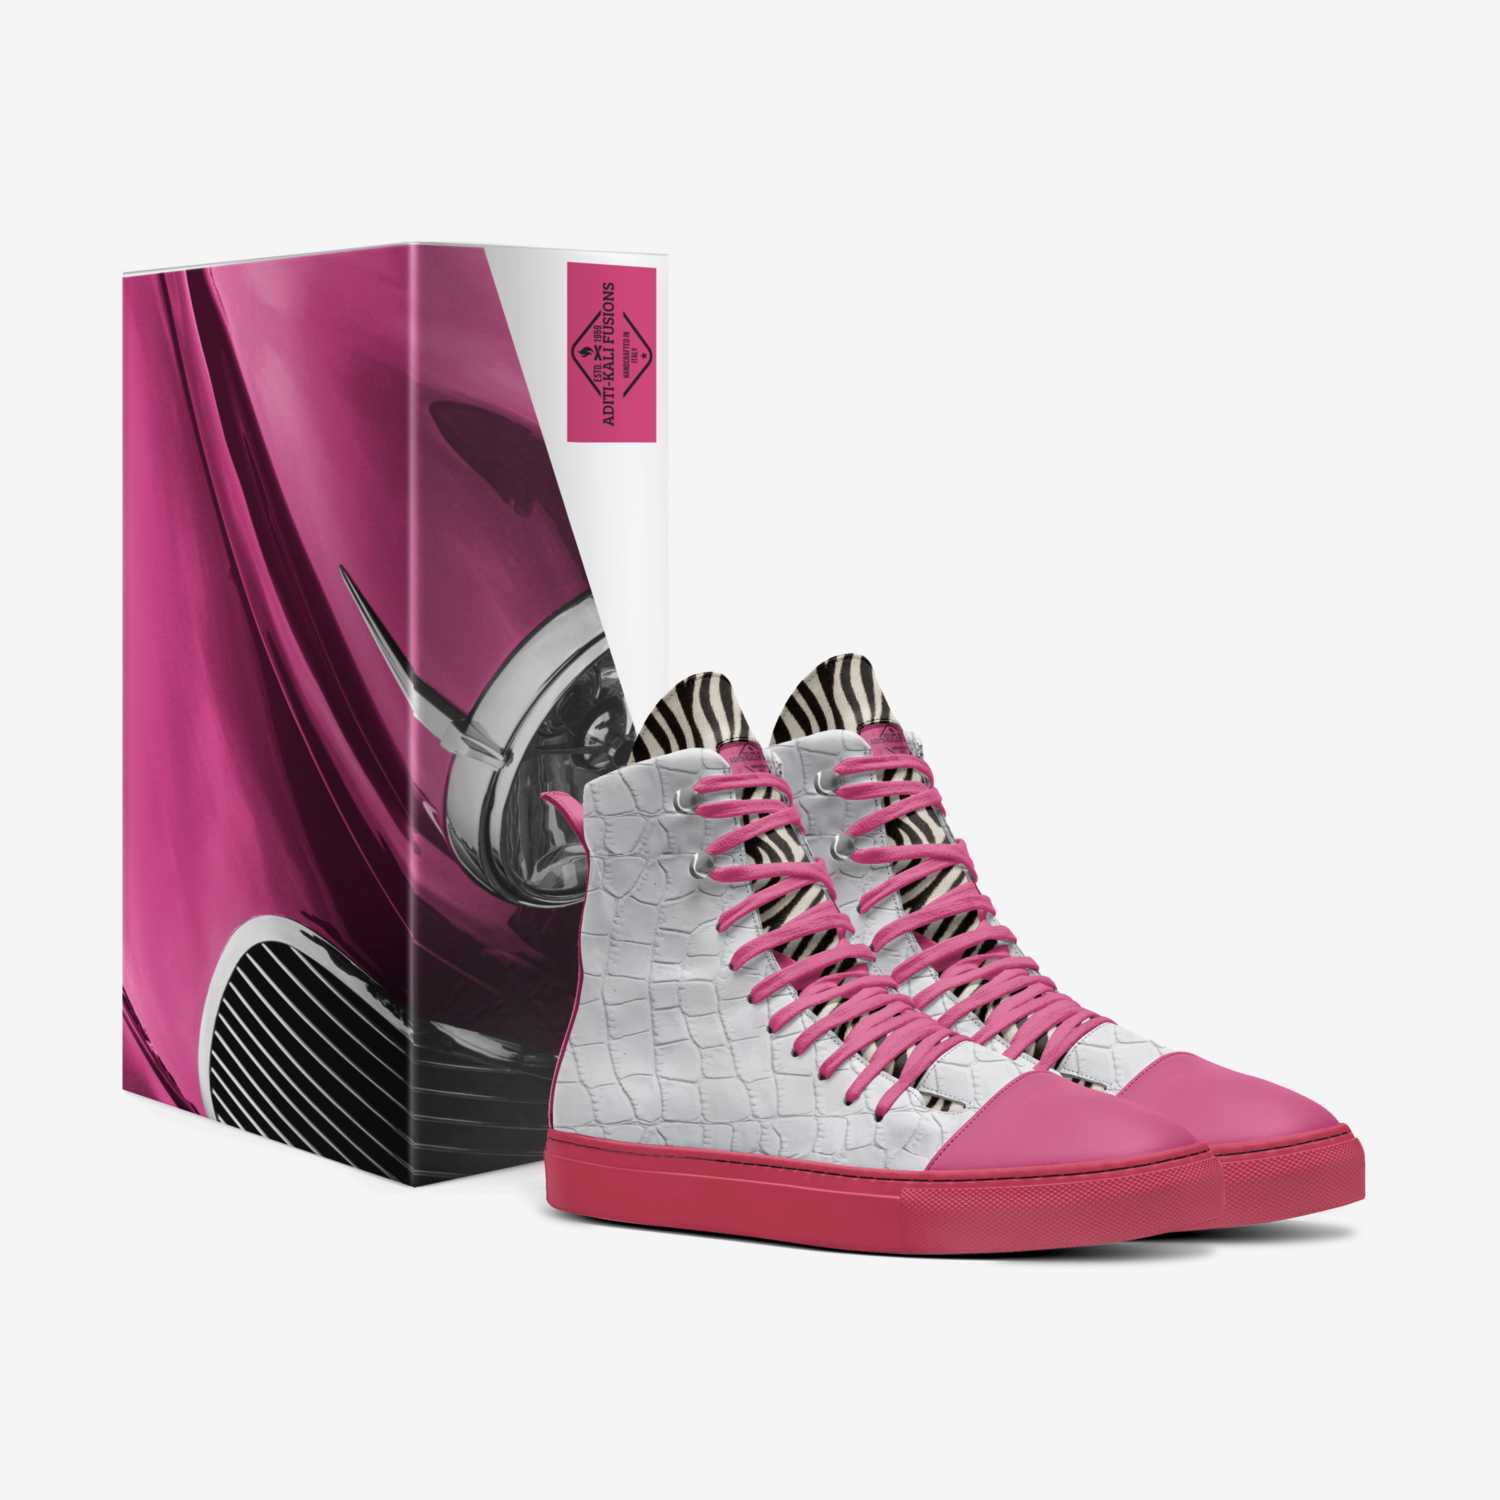 ADITI-KALI FUSIONS custom made in Italy shoes by Aditi-kali Of Wonkey Donkey Bazaar | Box view